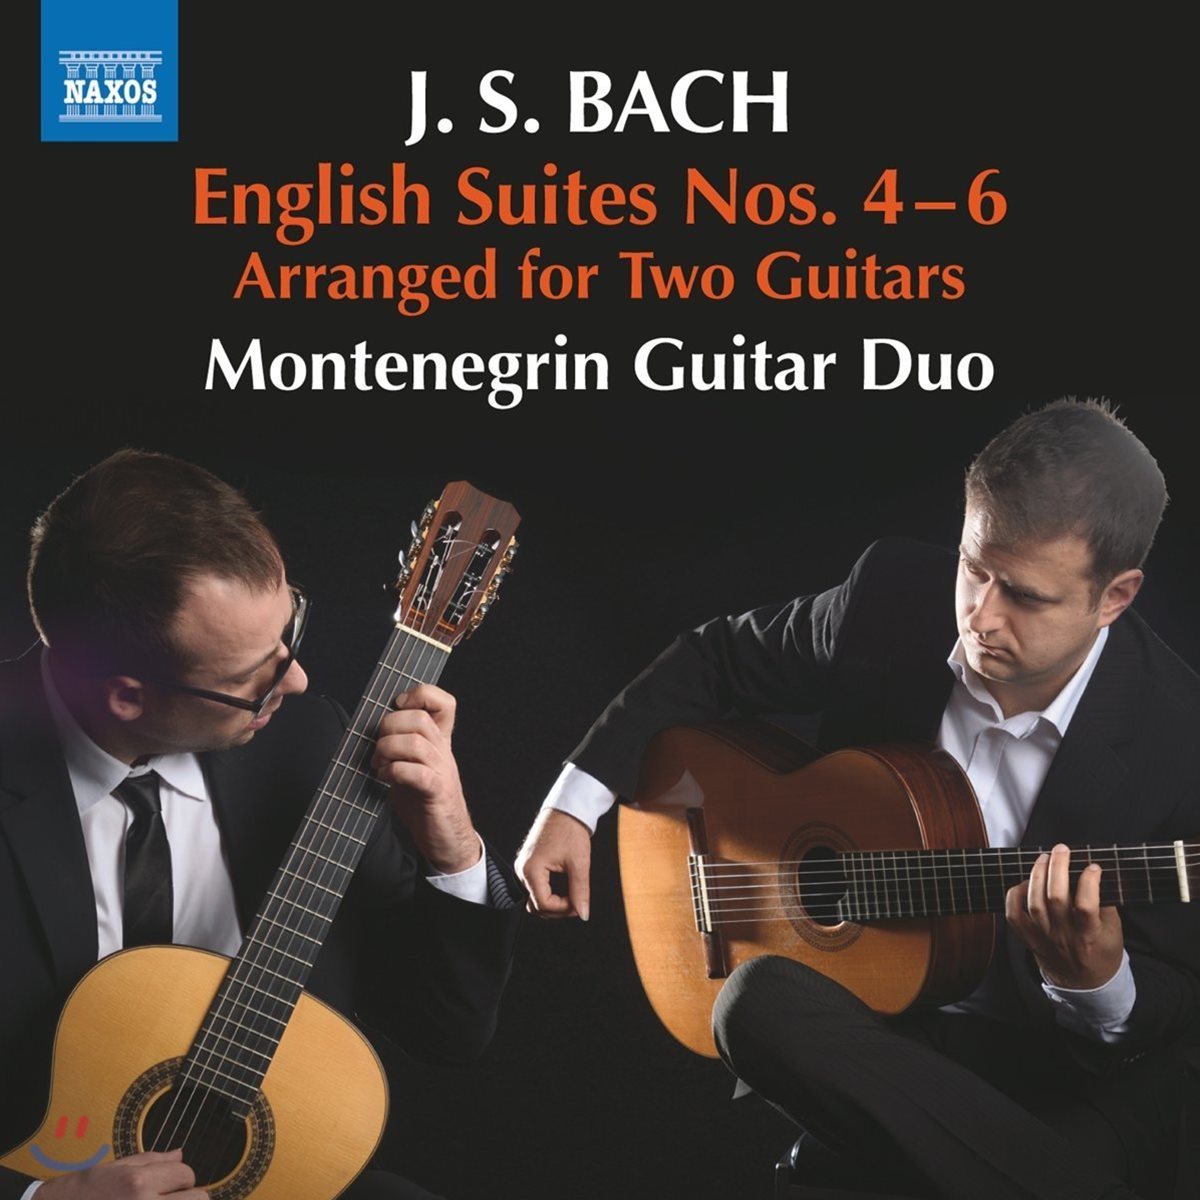 Montenegrin Guitar Duo 바흐: 영국 모음곡 4-6번 - 기타 이중주 편곡반 (Bach: English Suites Nos. 4-6)